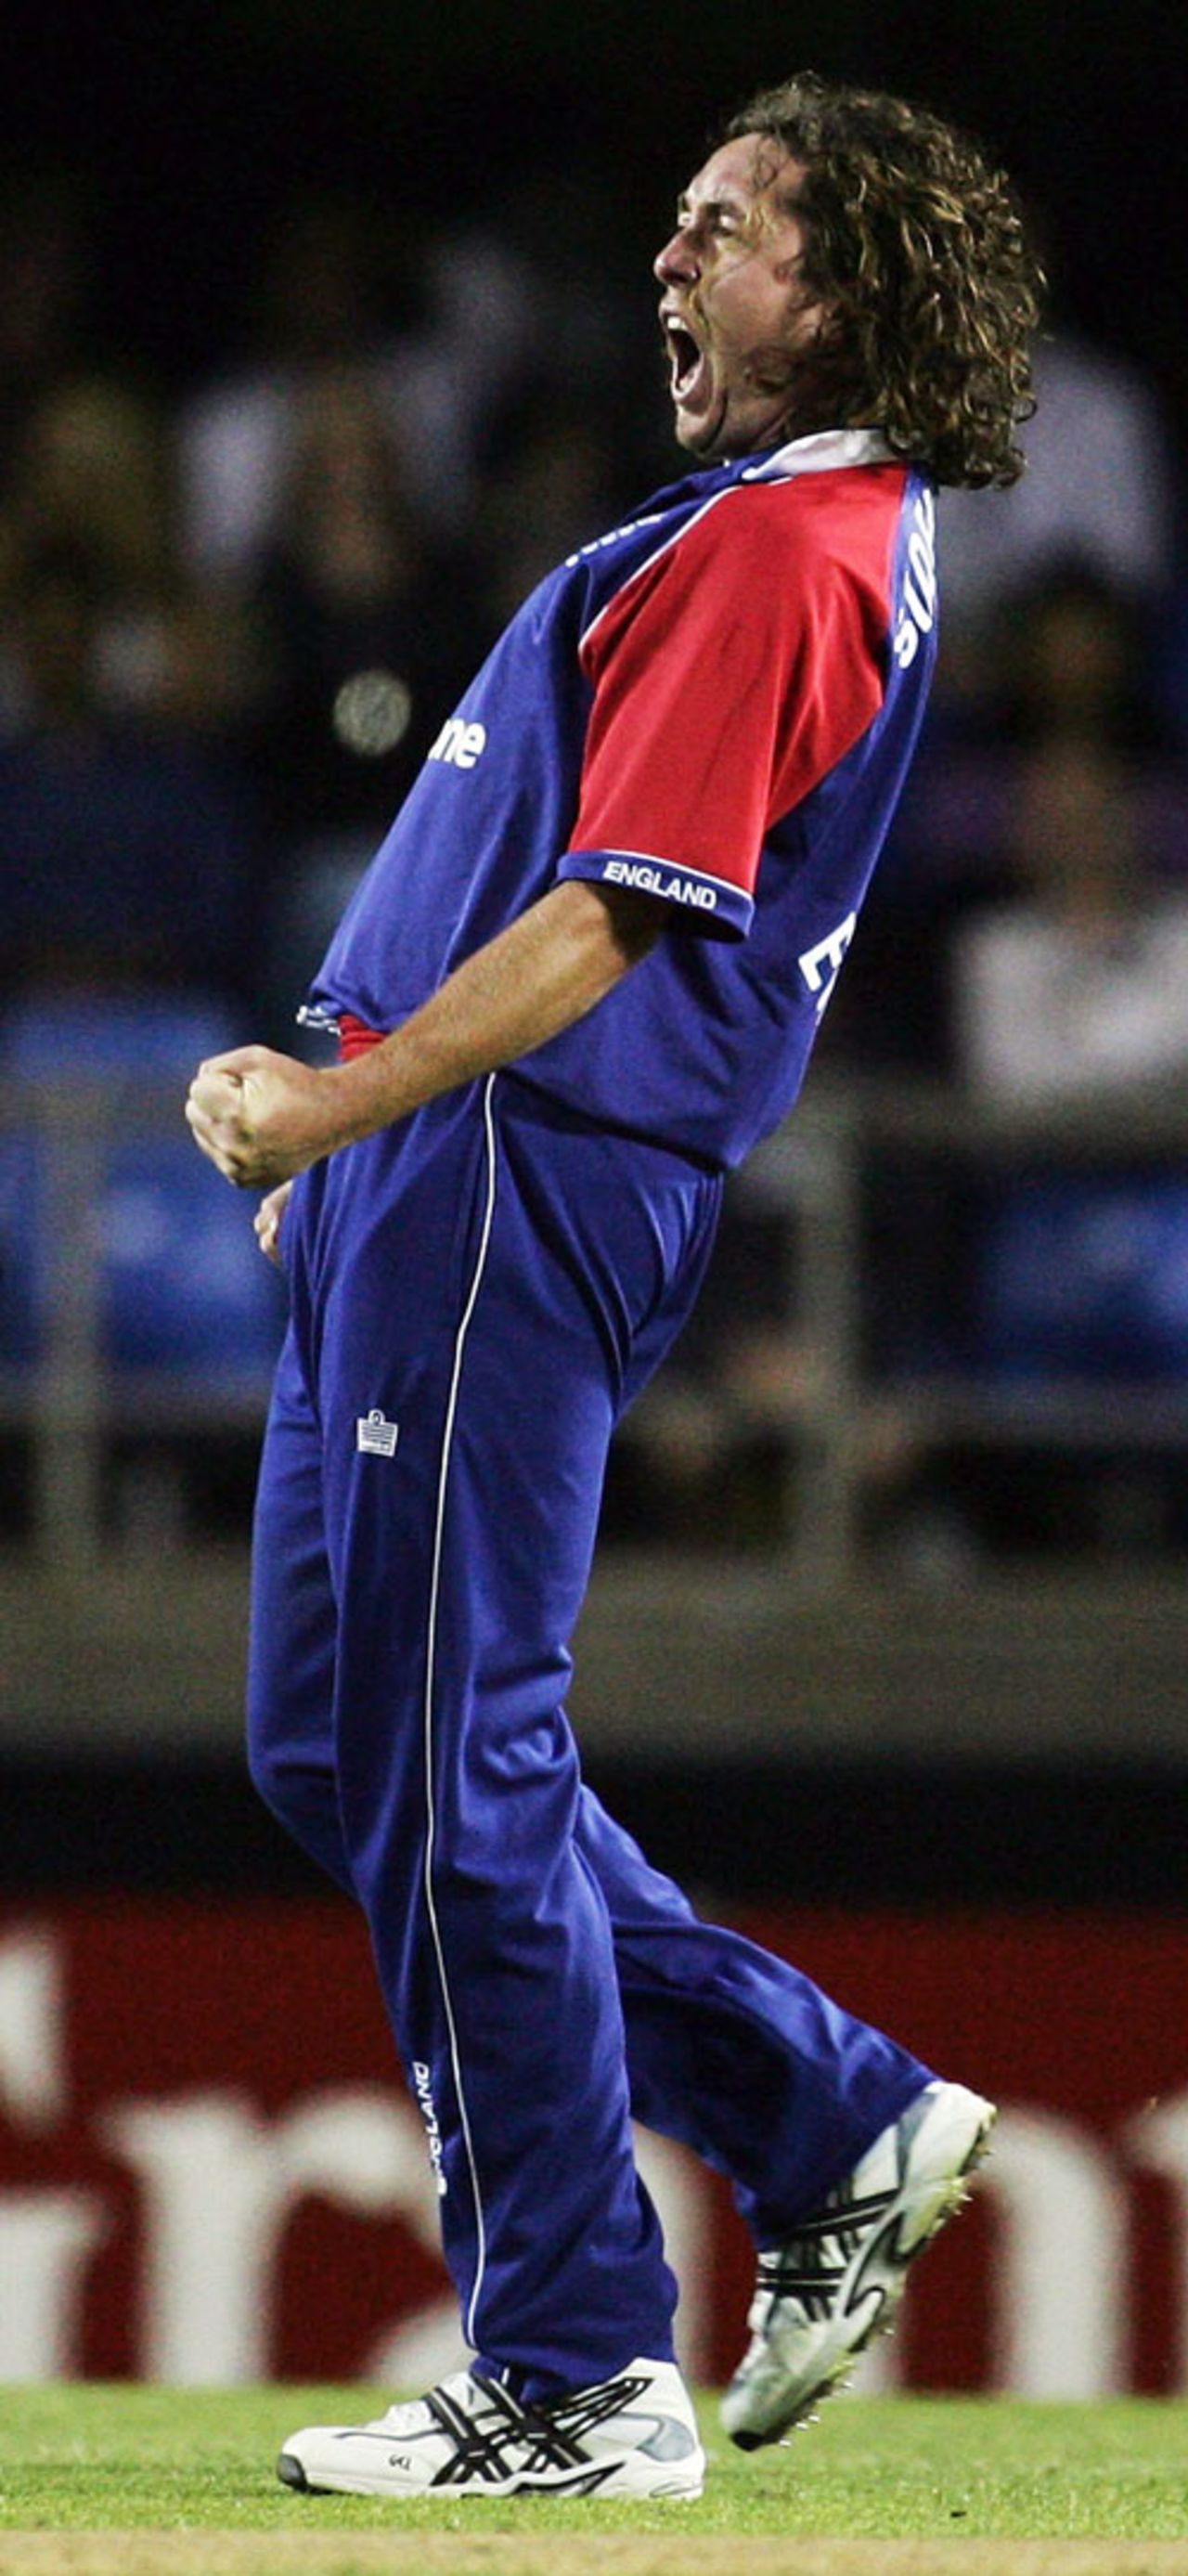 Ryan Sidebottom roars his delight after dismissing Ross Taylor, New Zealand v England, 1st Twenty20, Auckland, February 5, 2008